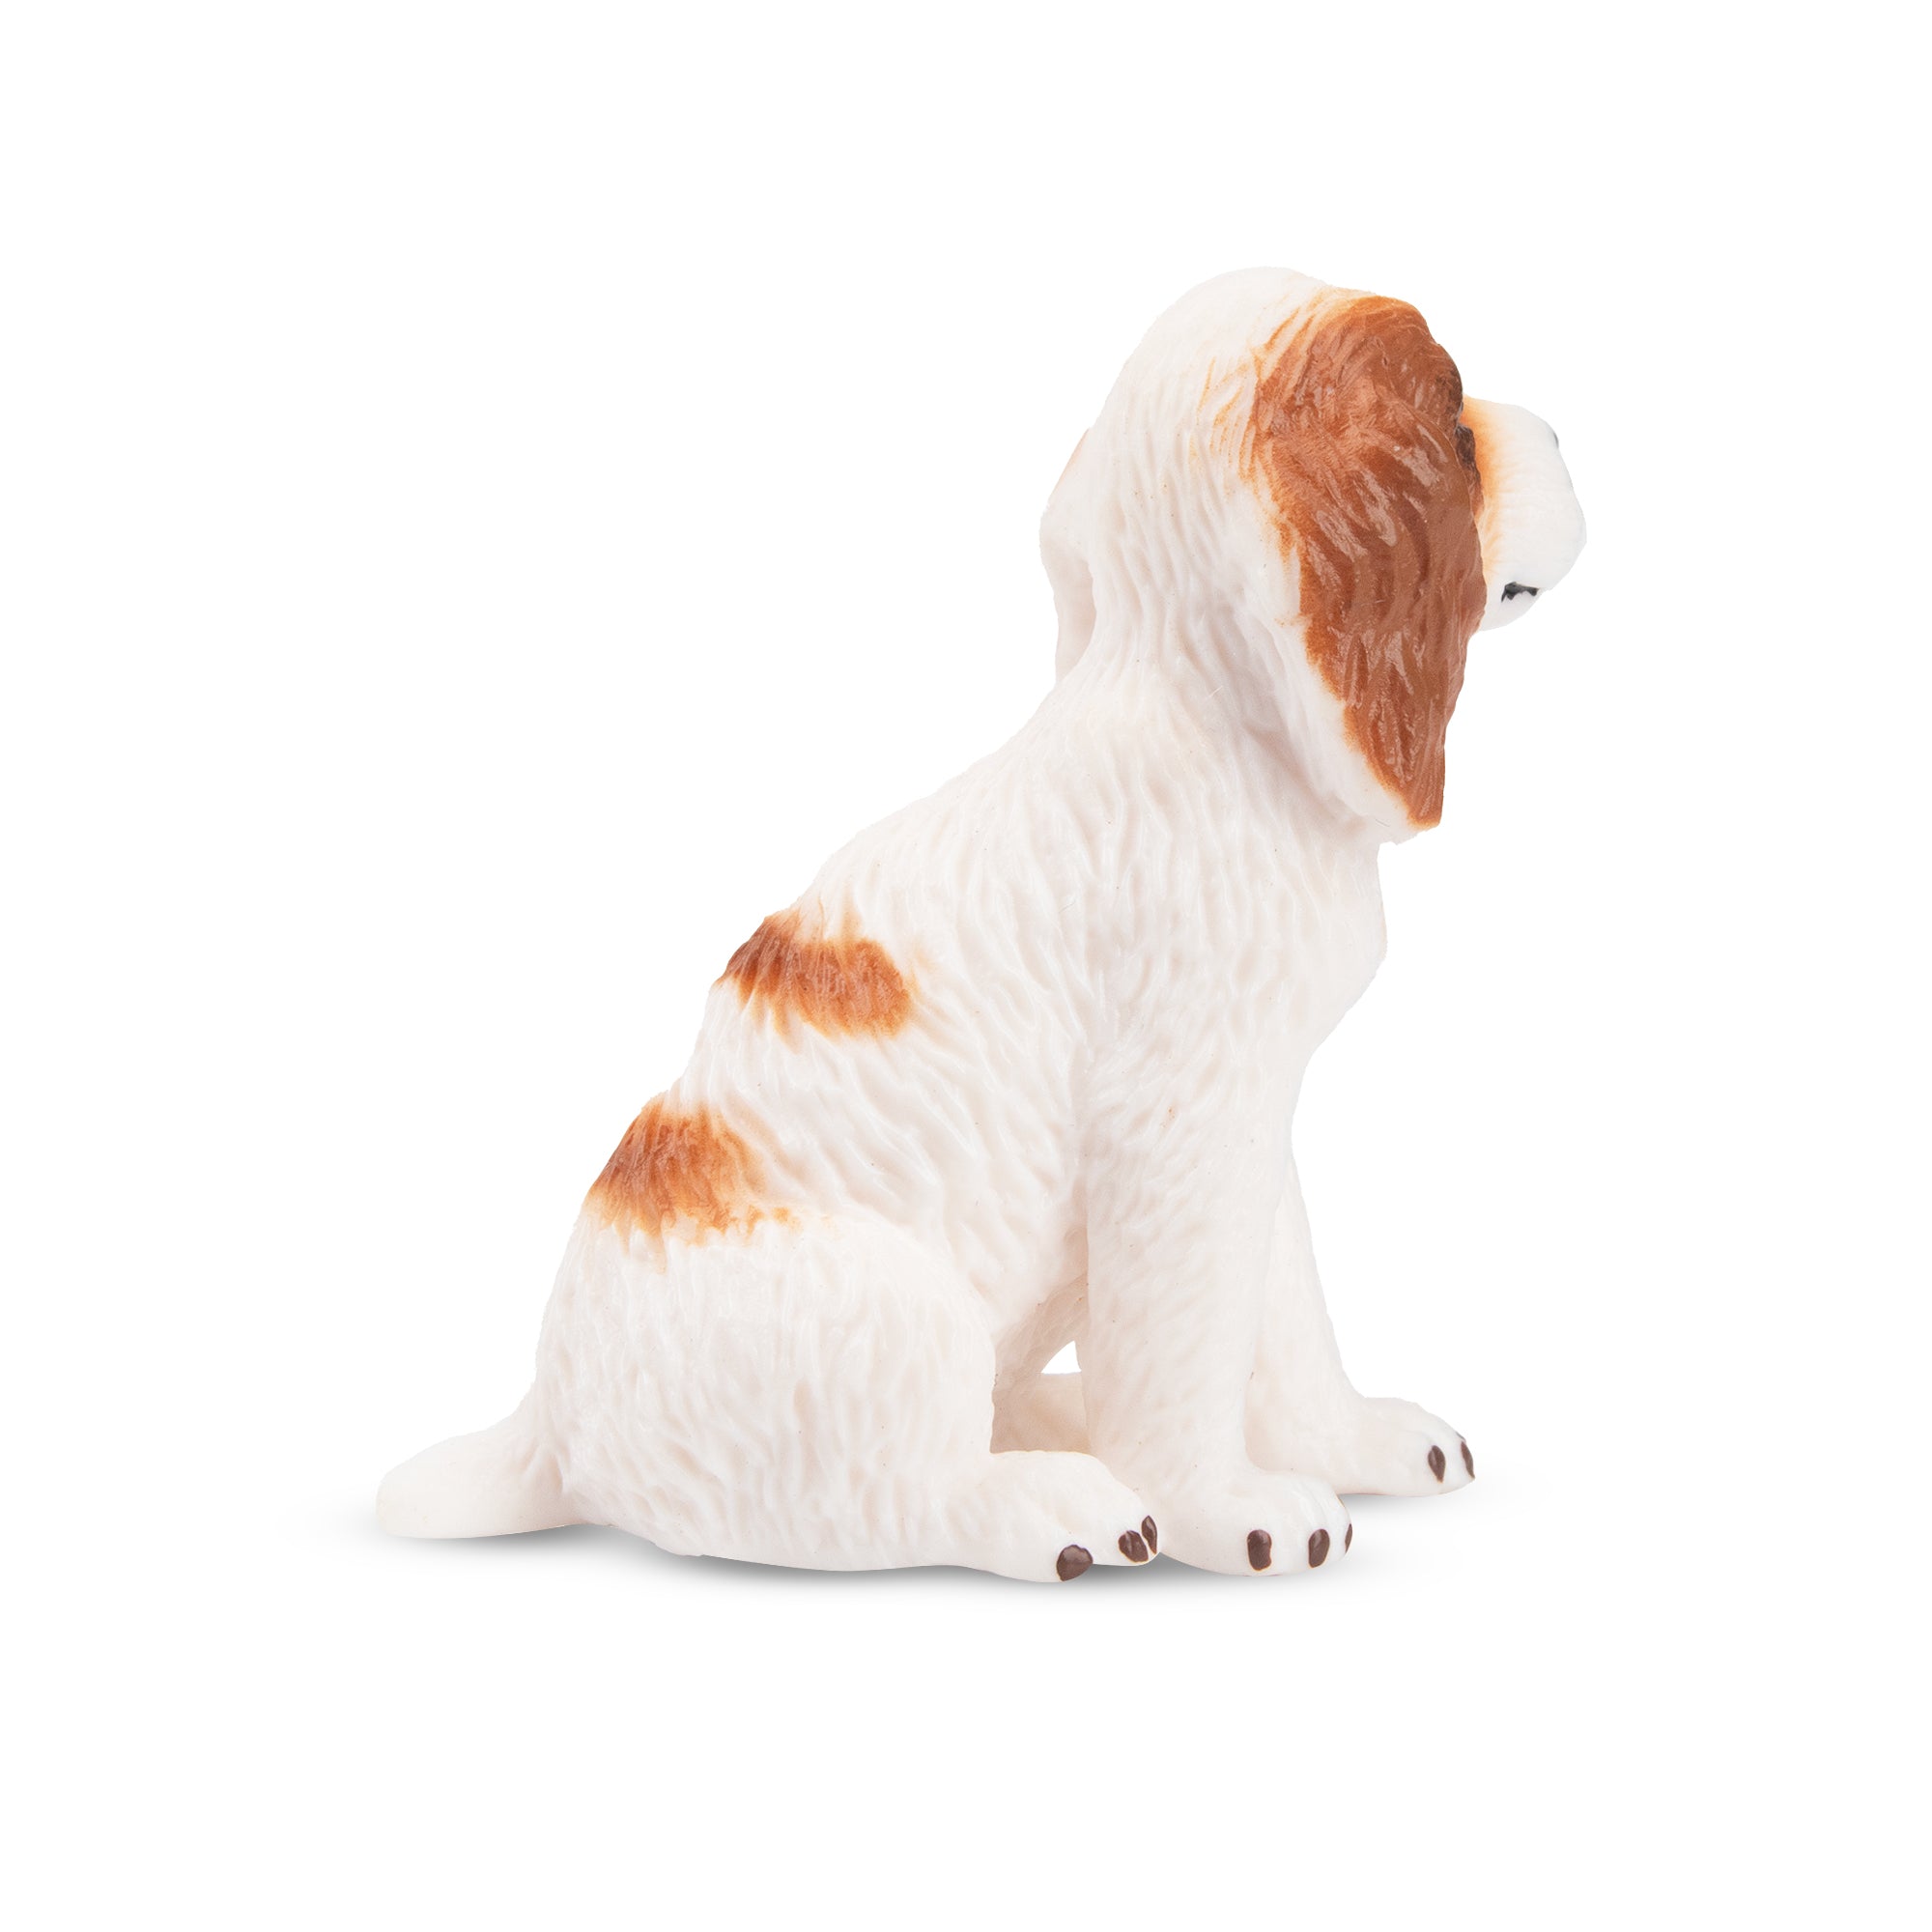 Toymany Mini Sitting Liver and White Cocker Spaniel Puppy Figurine Toy-2